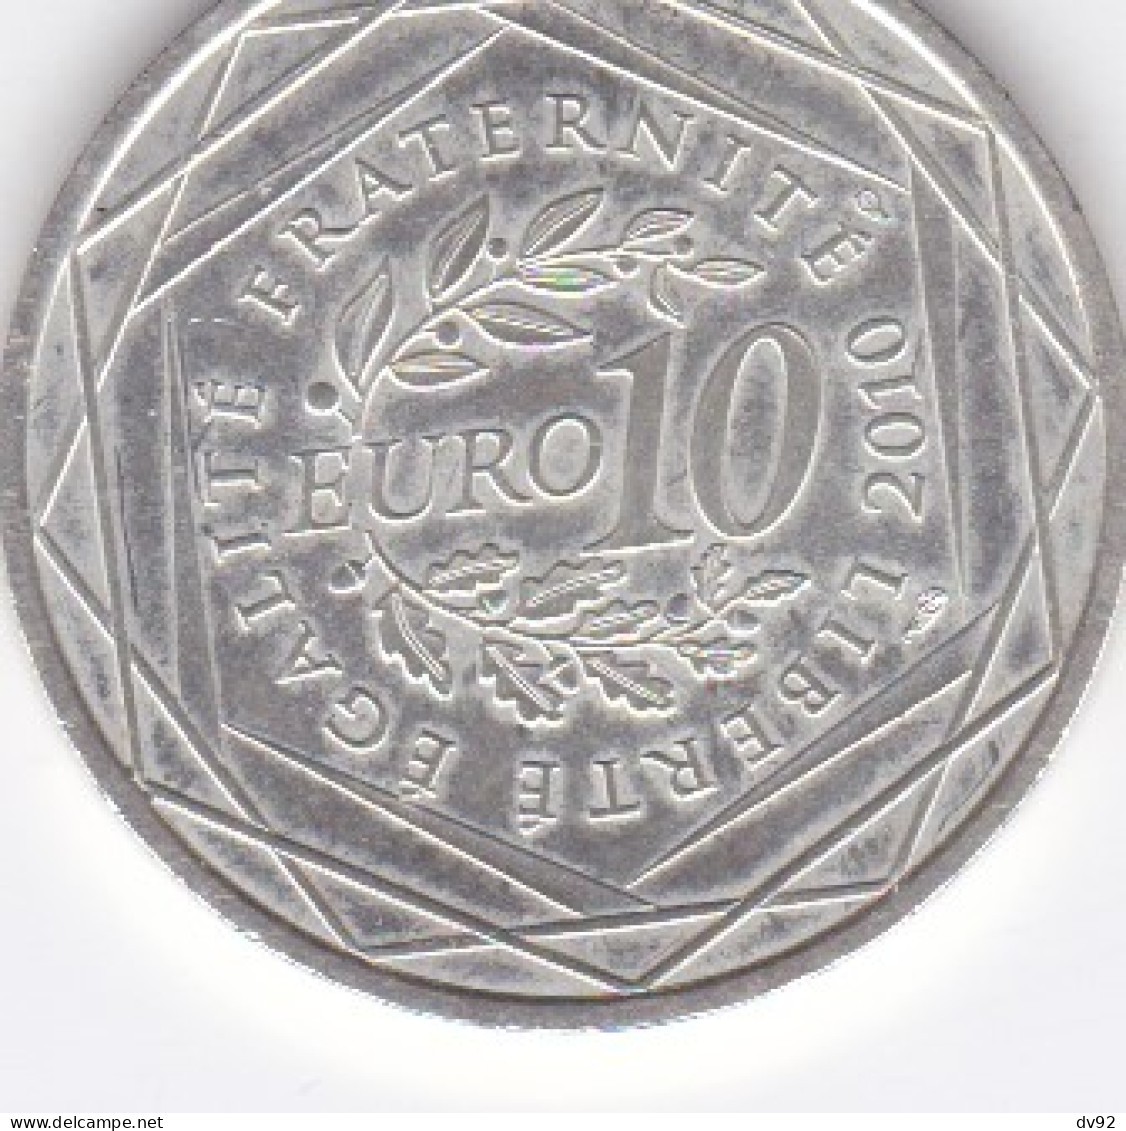 FRANCE 10 EUROS BASSE NORMANDIE - Frankreich